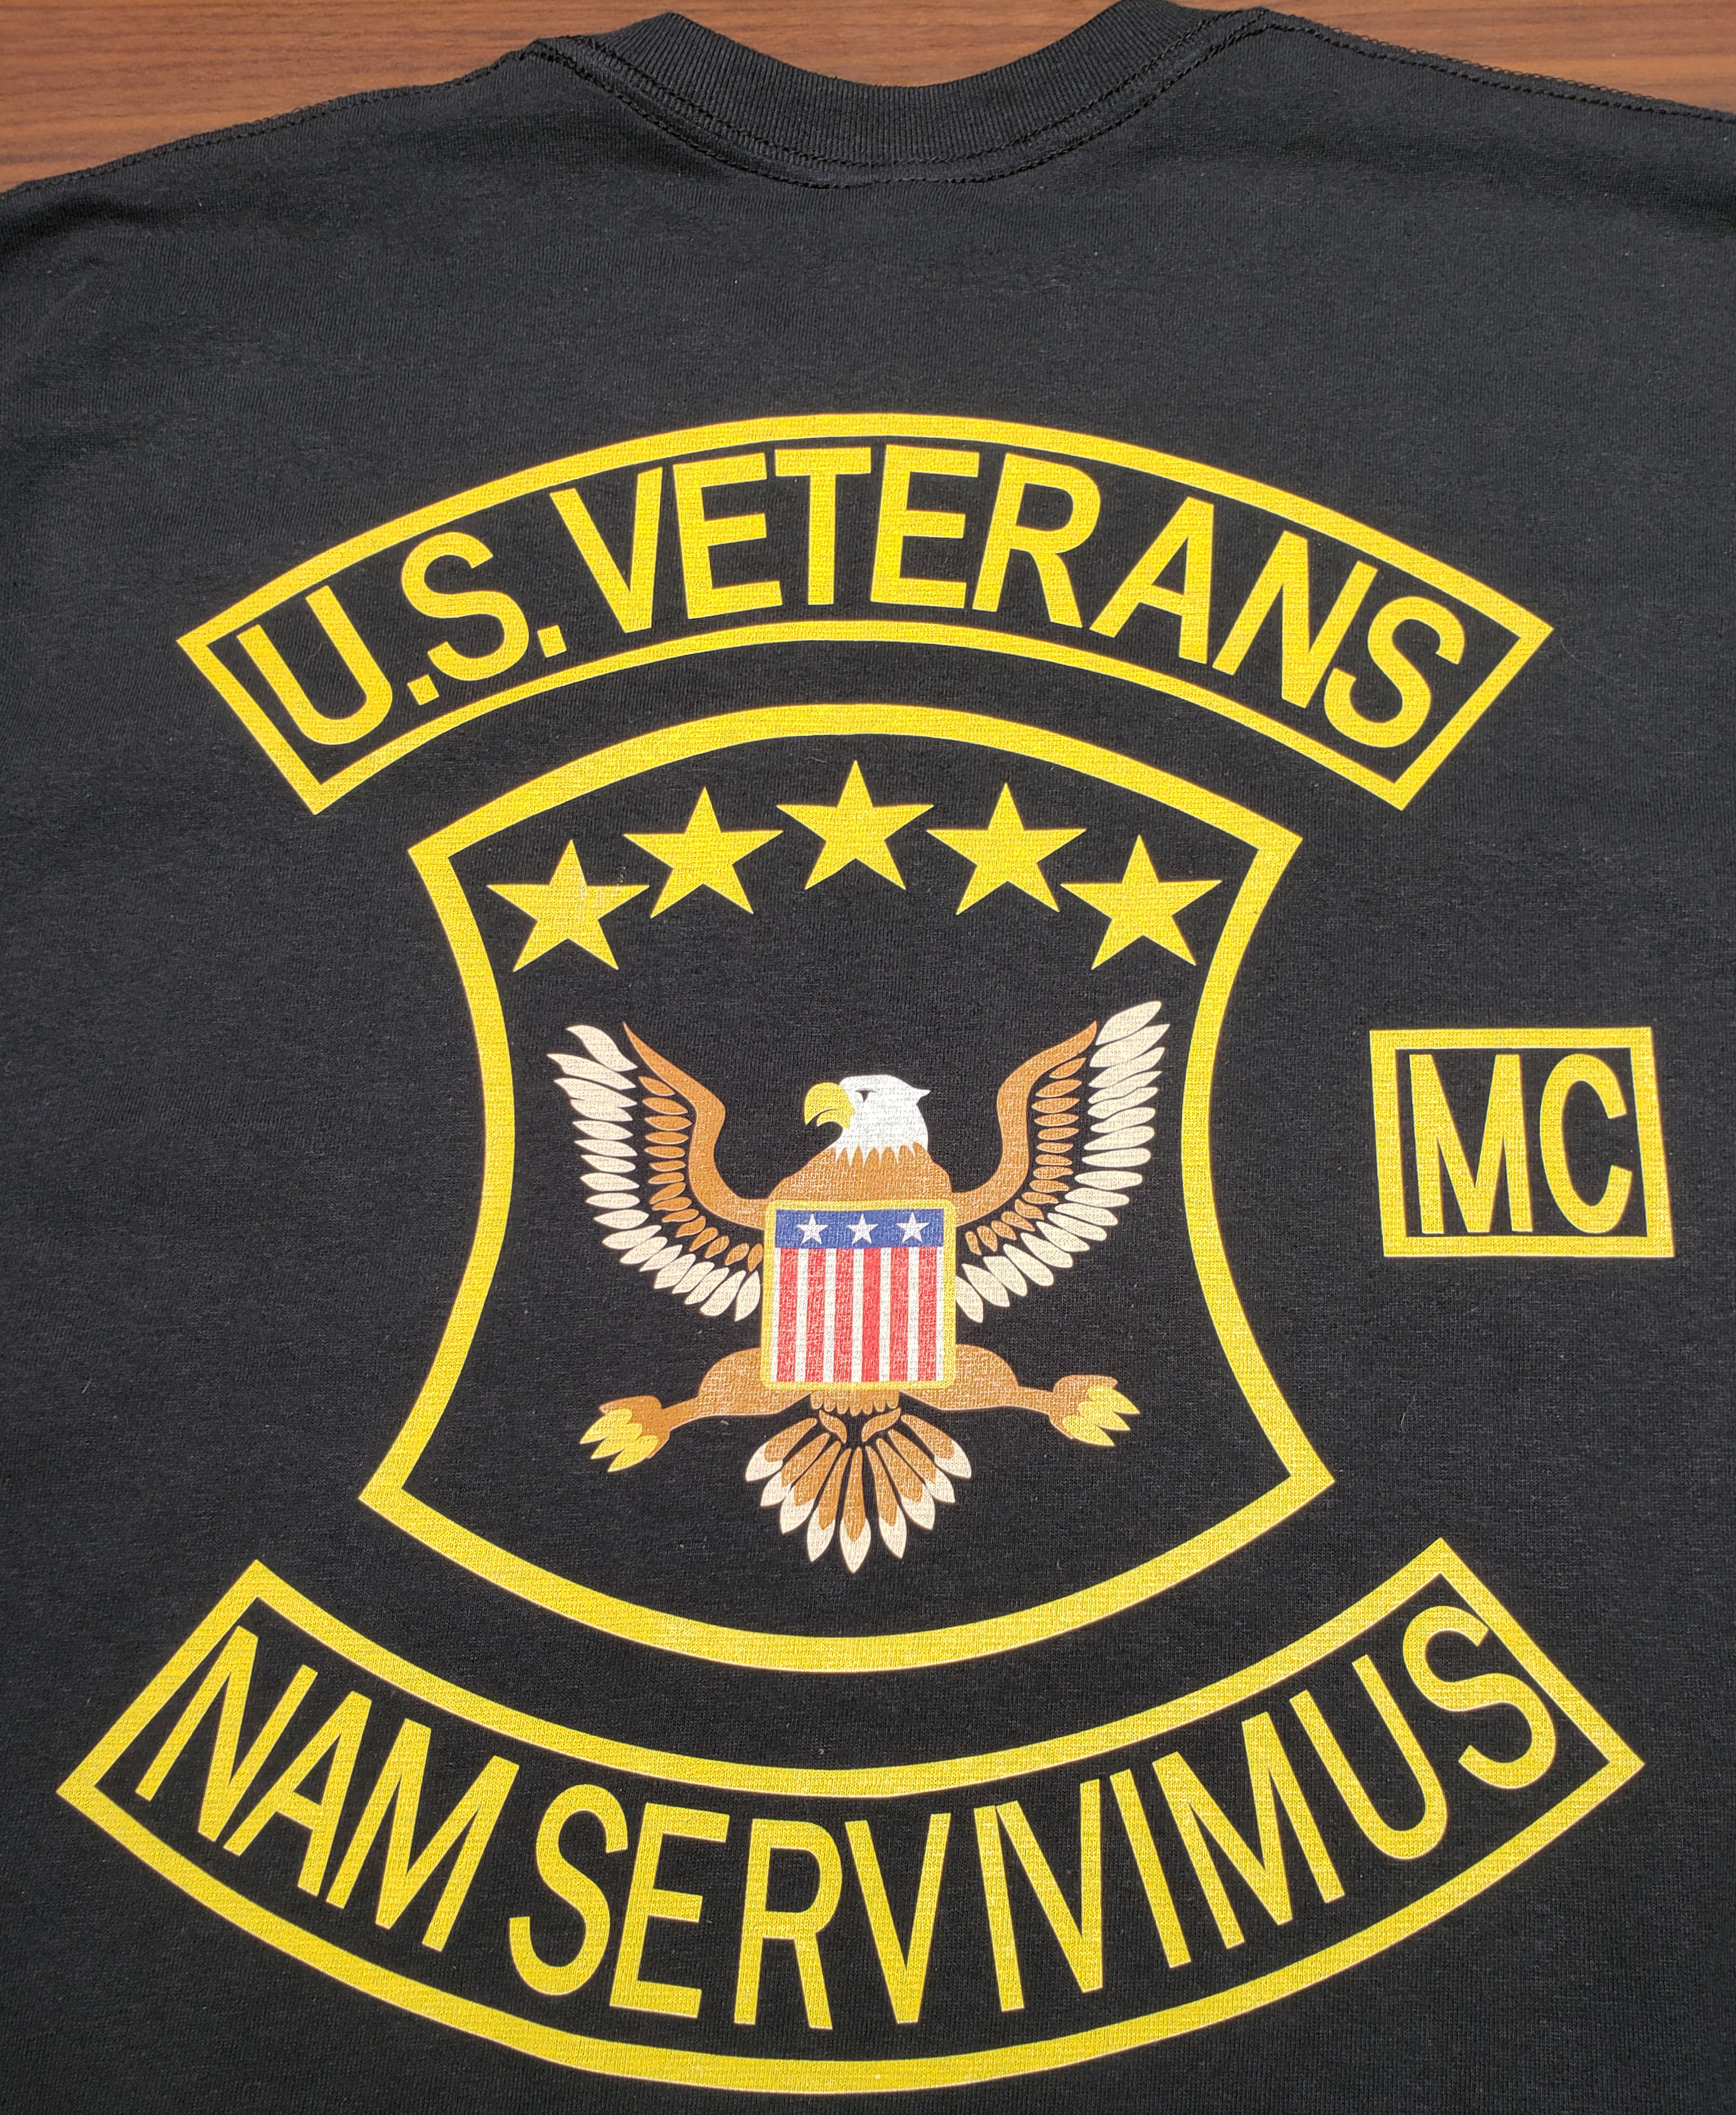 US Veterans MC Short Sleeve Reflective T-Shirt (Size: Large, Color: Black, USVMC Lower Rocker Options: Army)